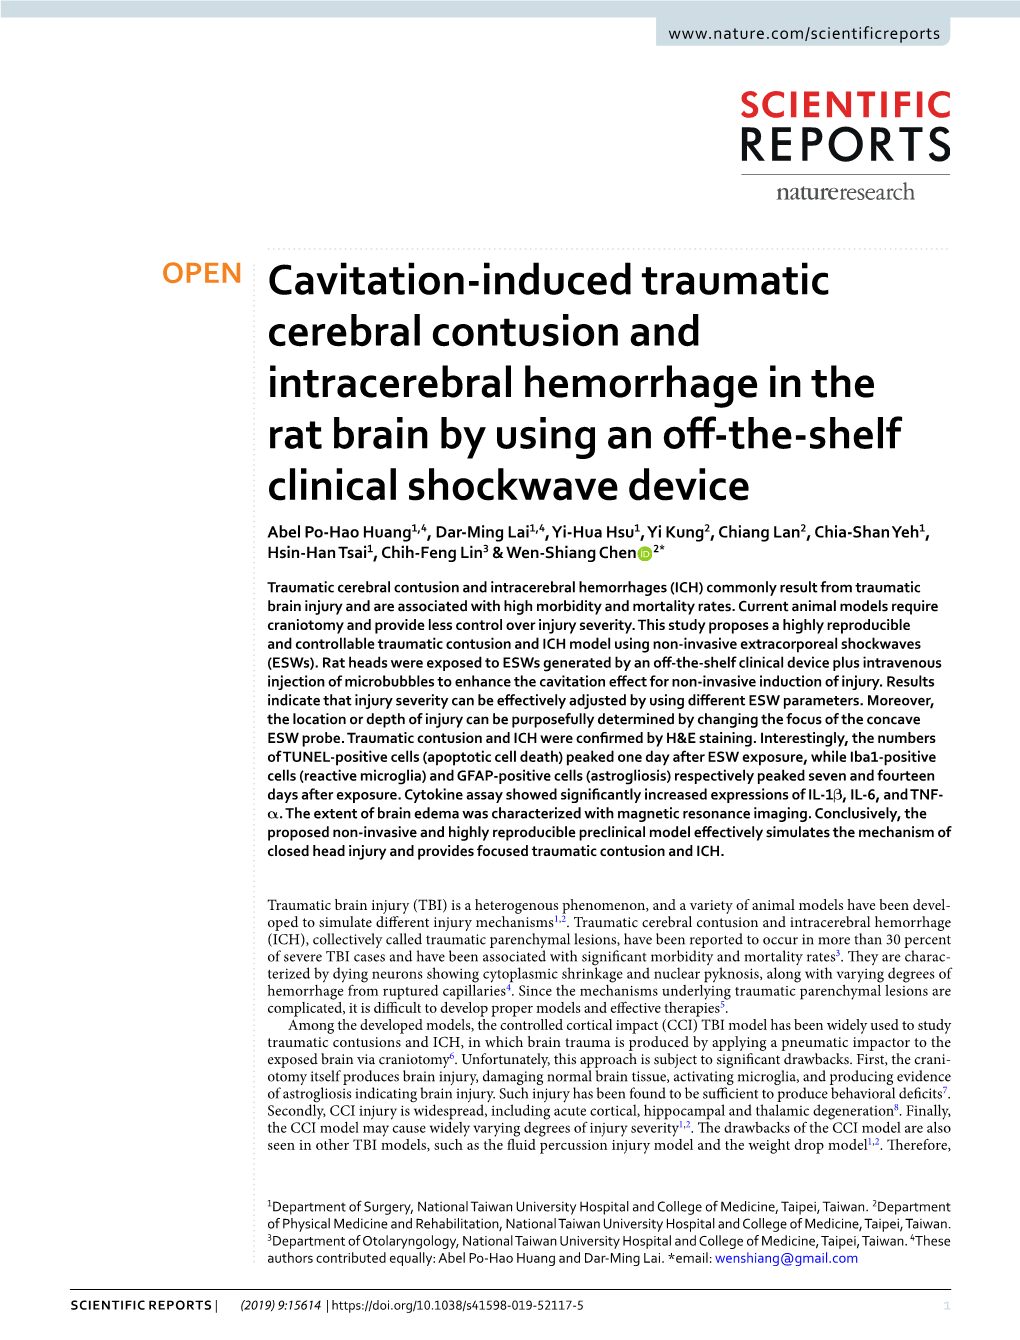 Cavitation-Induced Traumatic Cerebral Contusion and Intracerebral